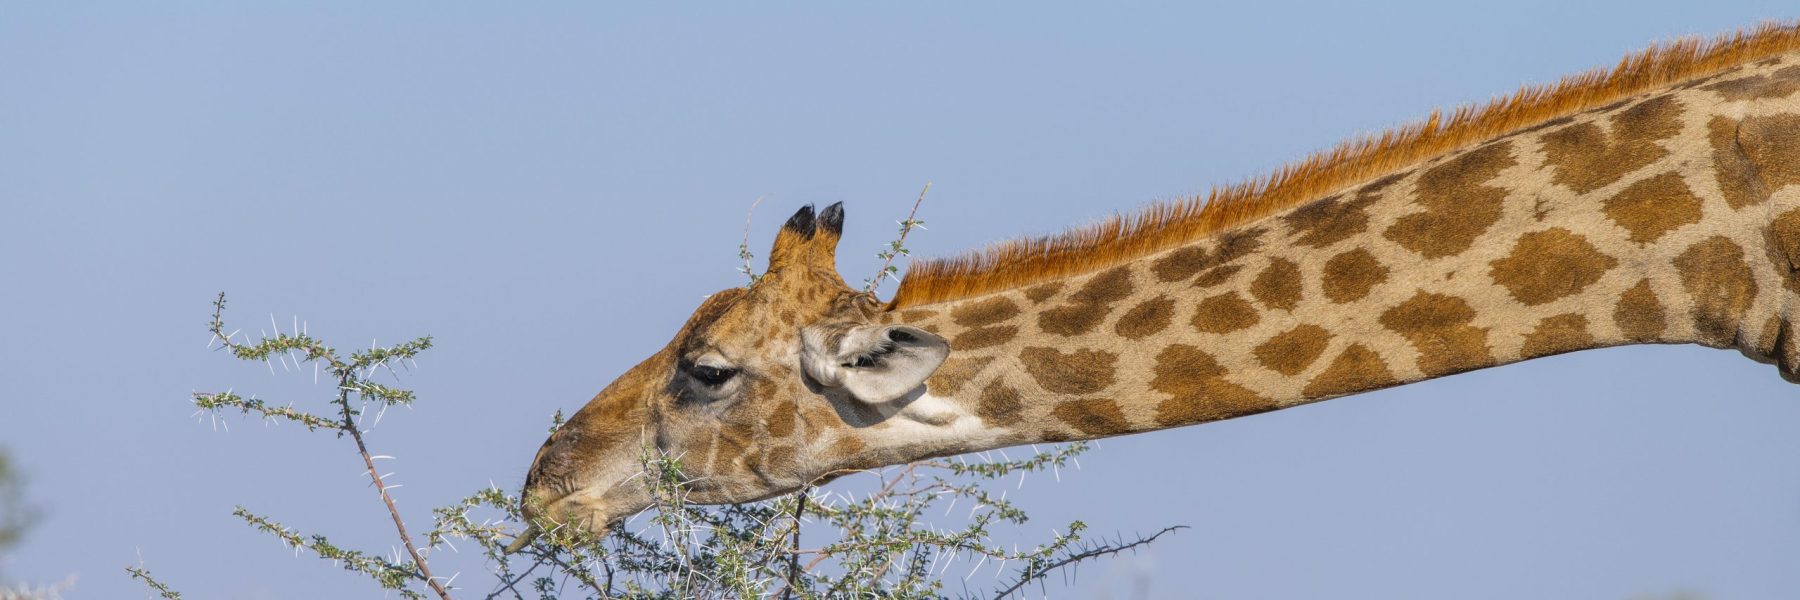 Giraffe (Giraffa) frisst an einem Dornbusch, Etosha National Park, Namibia